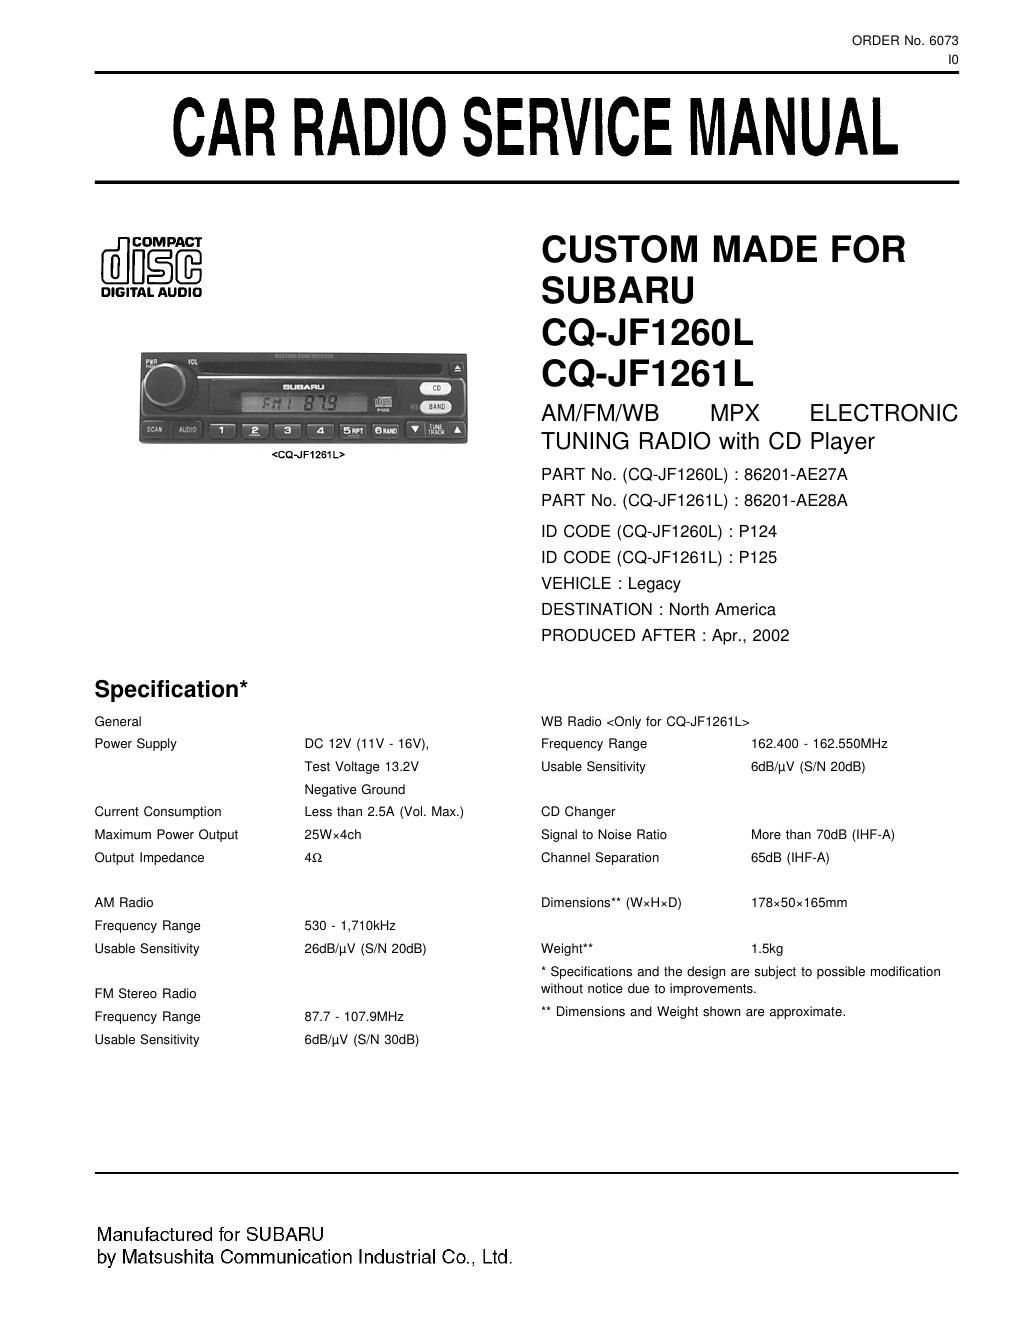 panasonic cq jf 1260 l service manual